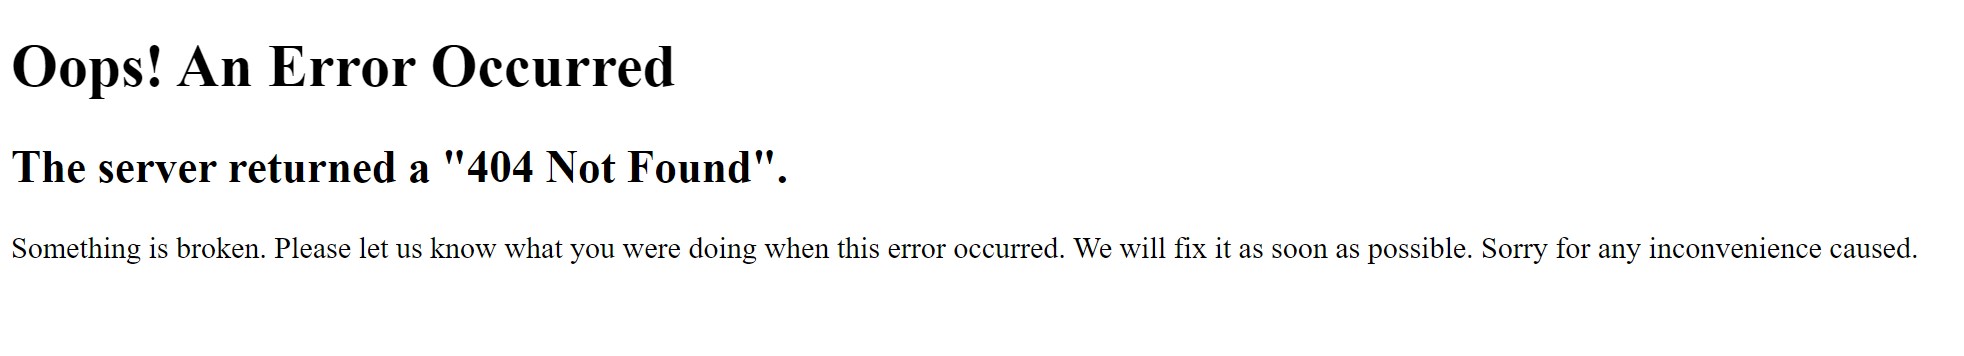 Internal Server Error. Oops, an Error occurred.. Упс ошибка. Ошибка сервера иллюстрация.